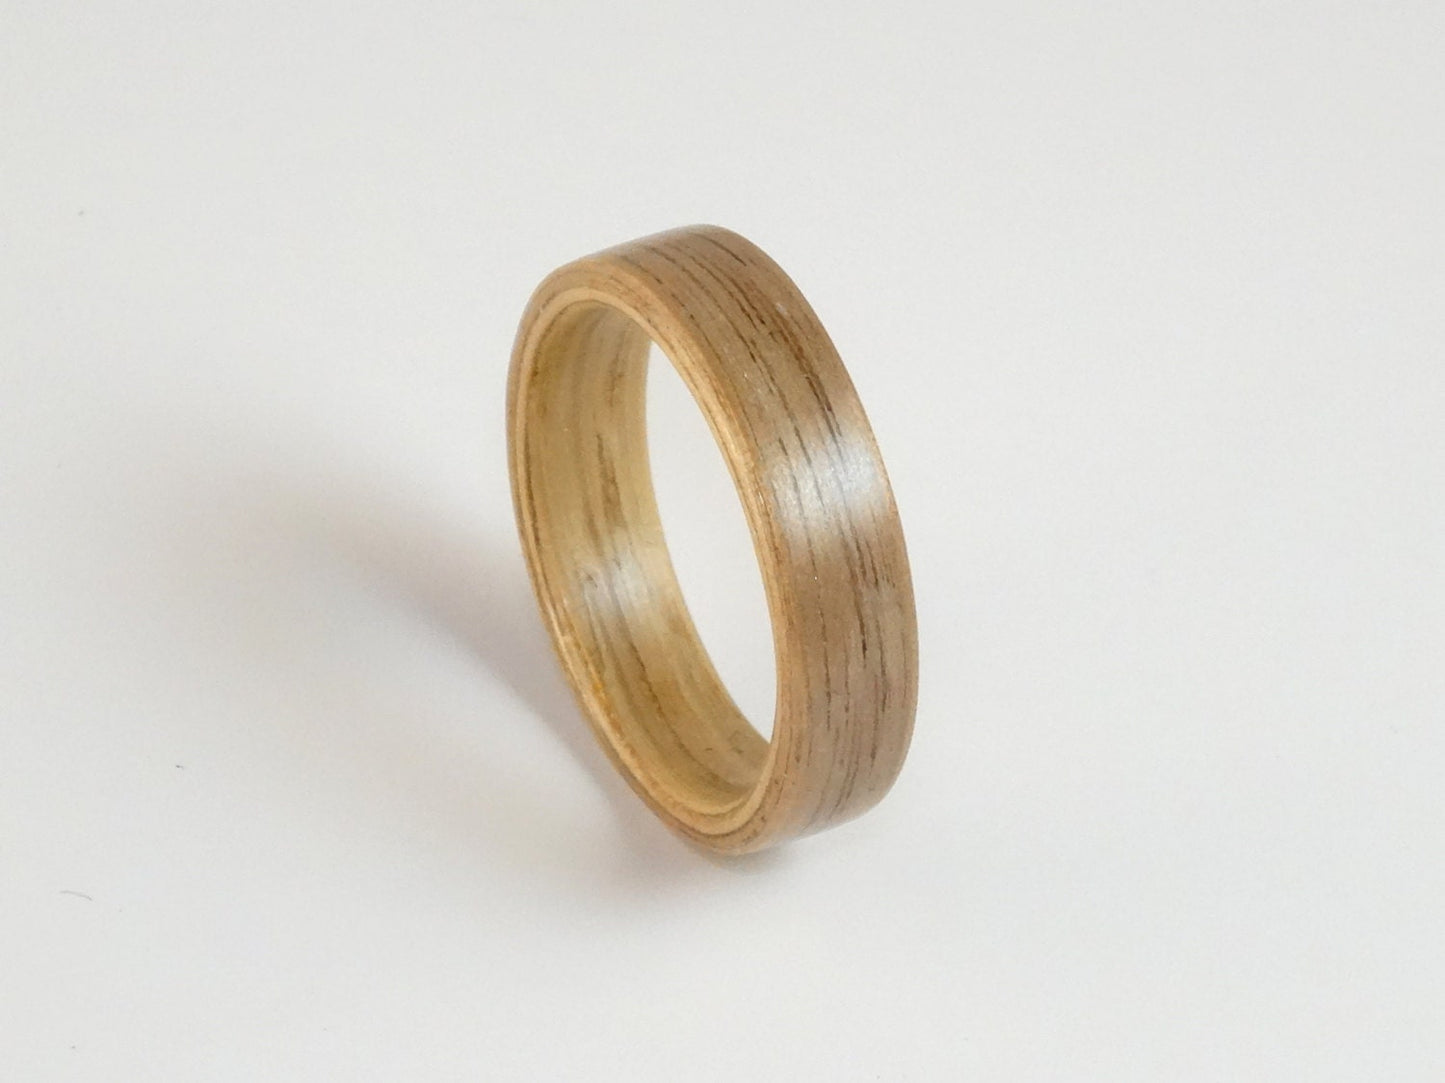 Oak and Walnut Bent Wood Ring